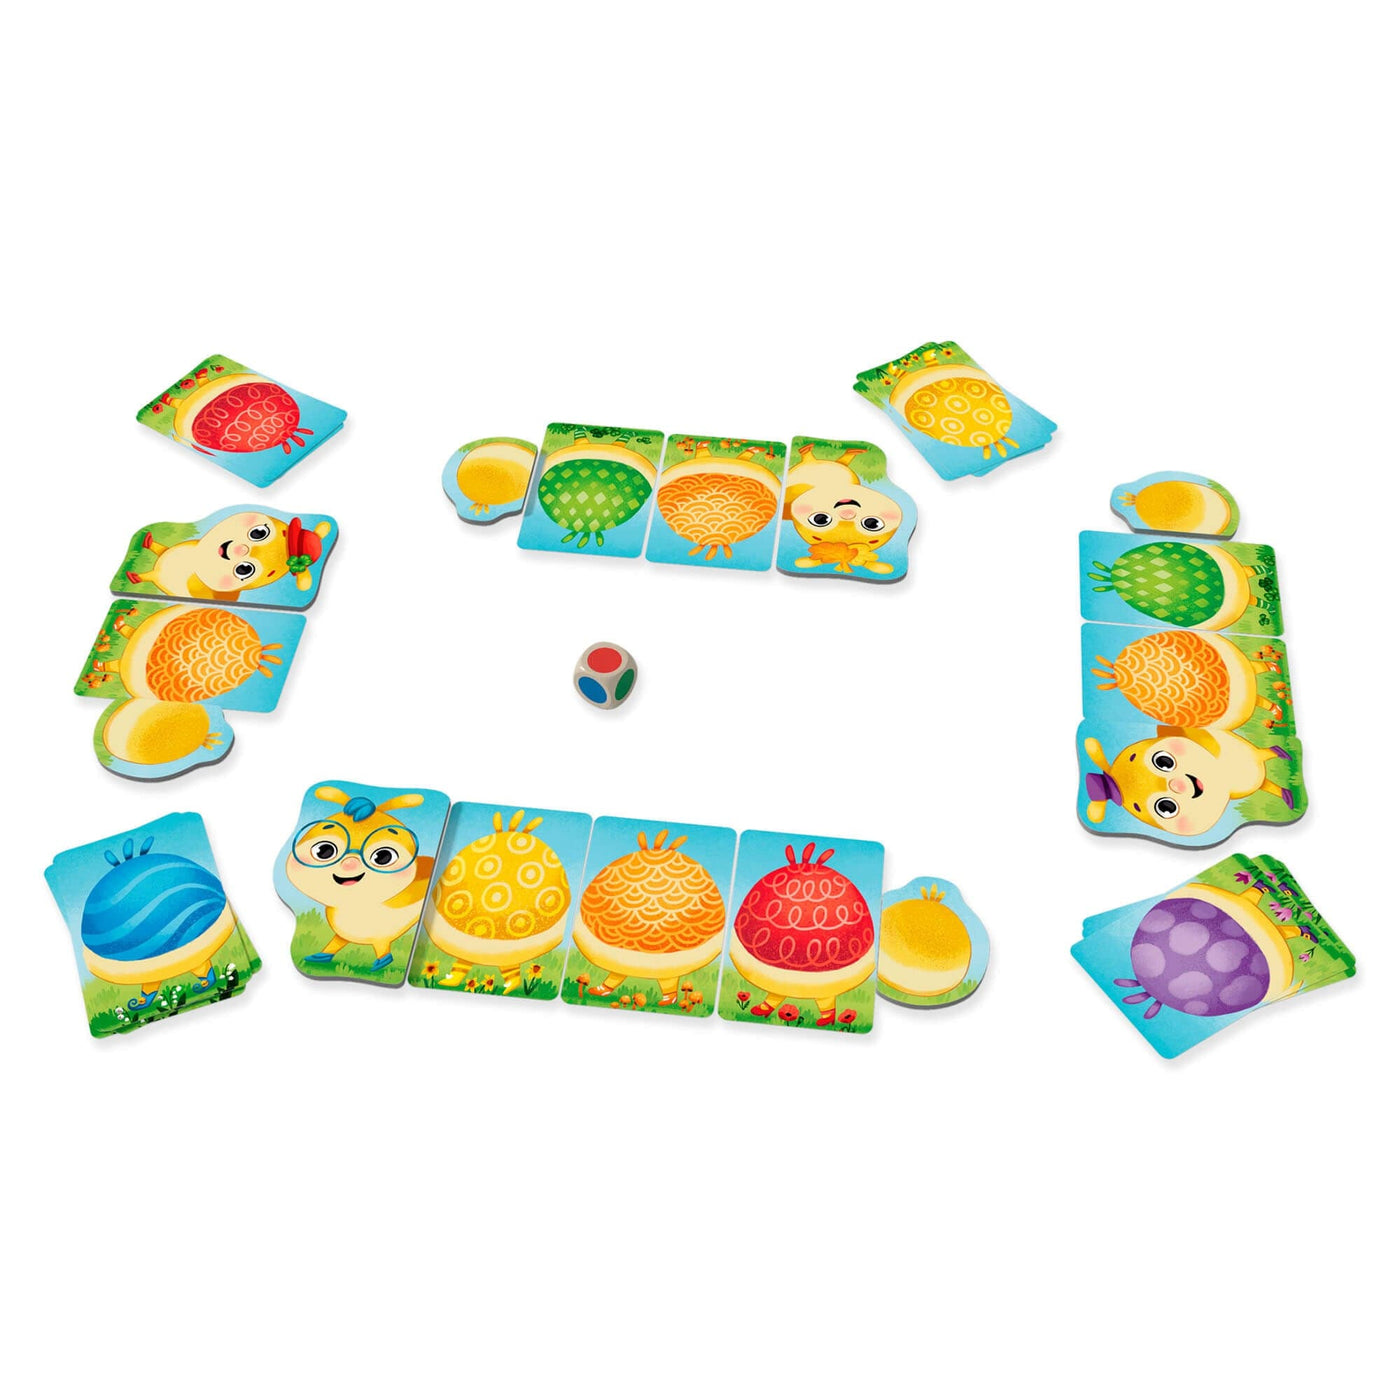 Rainbow Caterpillar game pieces with wooden die